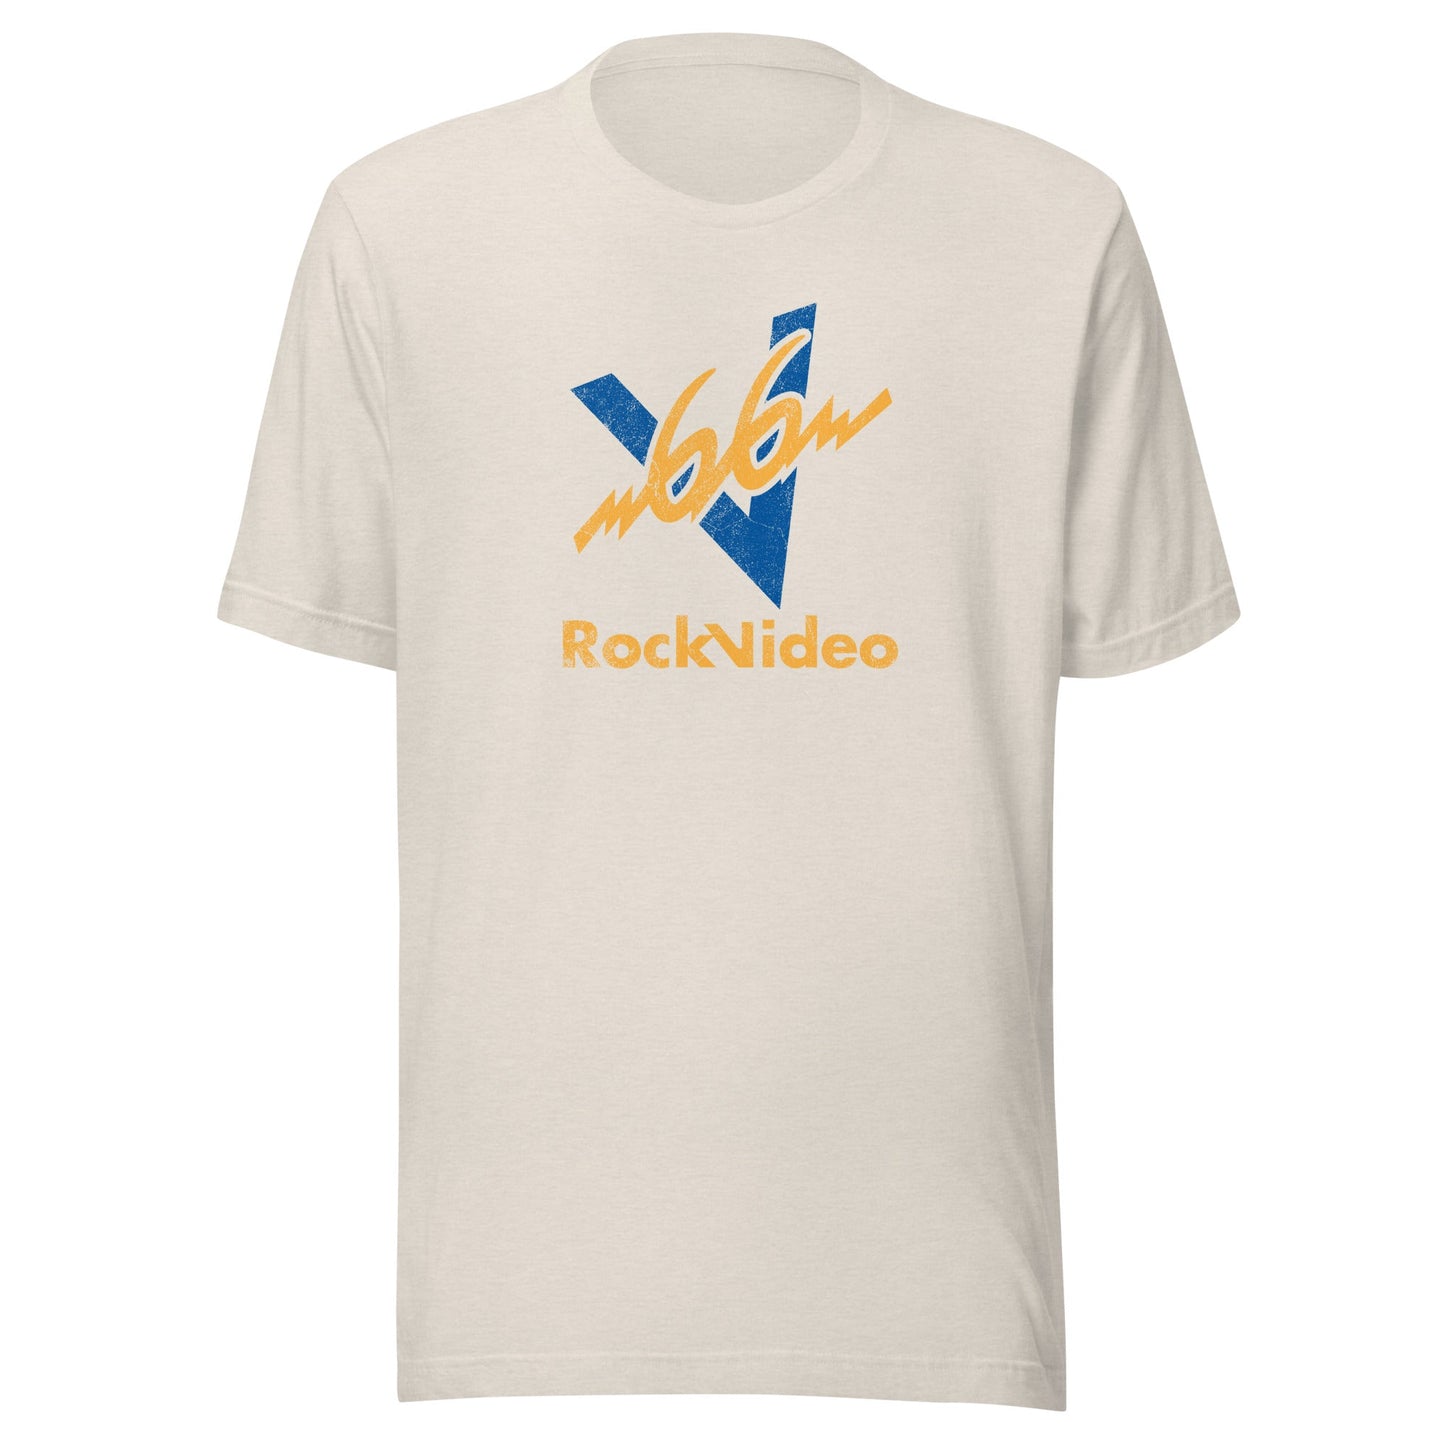 V66 Boston Rock Video Retro 1980s T-Shirt - Vintage Mens & Womens Old School Music Tee